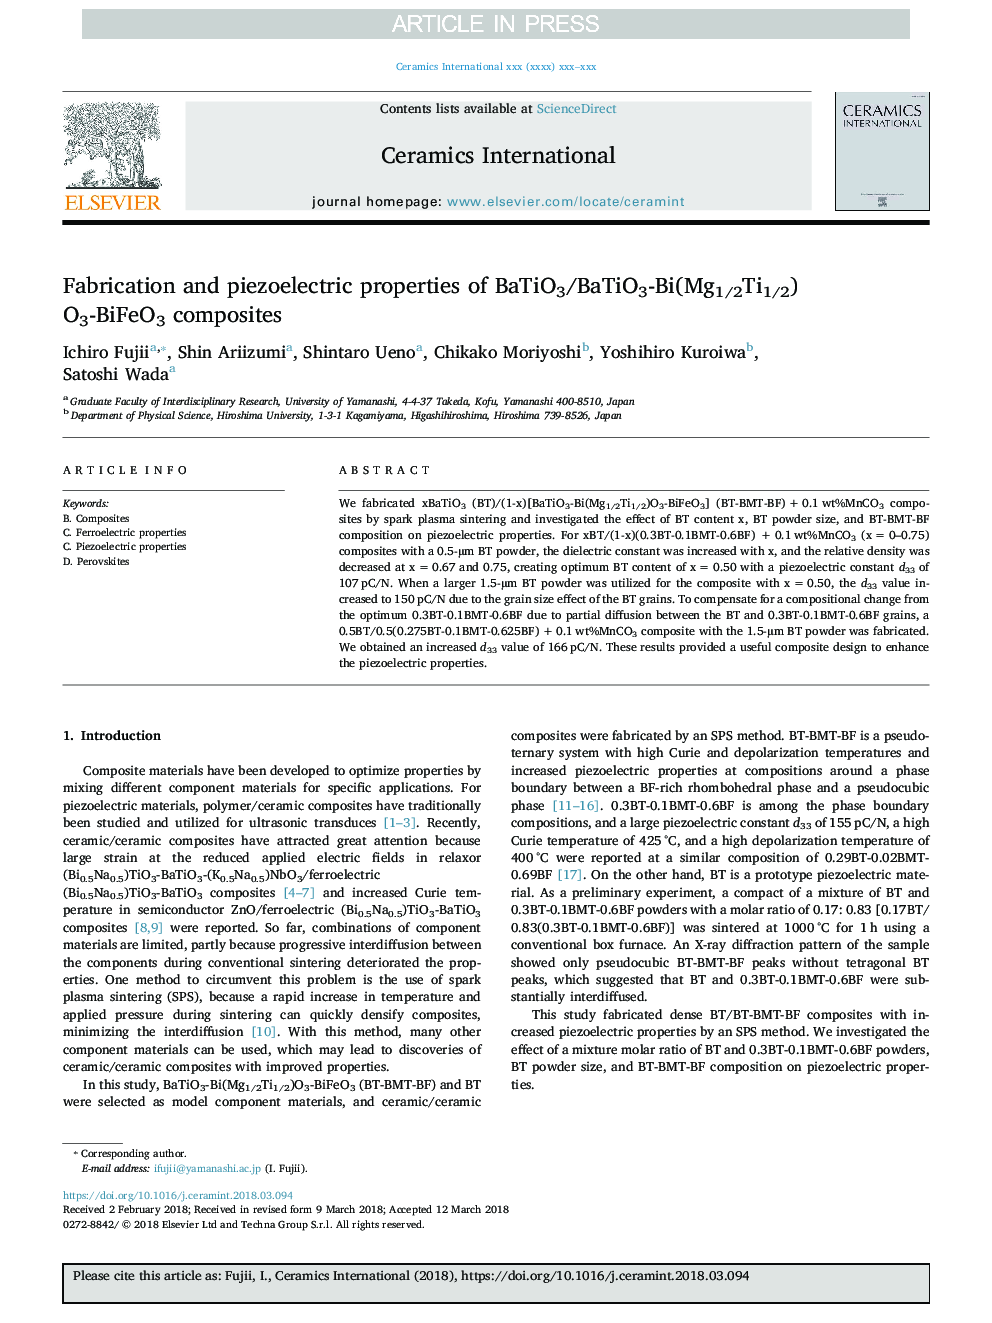 Fabrication and piezoelectric properties of BaTiO3/BaTiO3-Bi(Mg1/2Ti1/2)O3-BiFeO3 composites